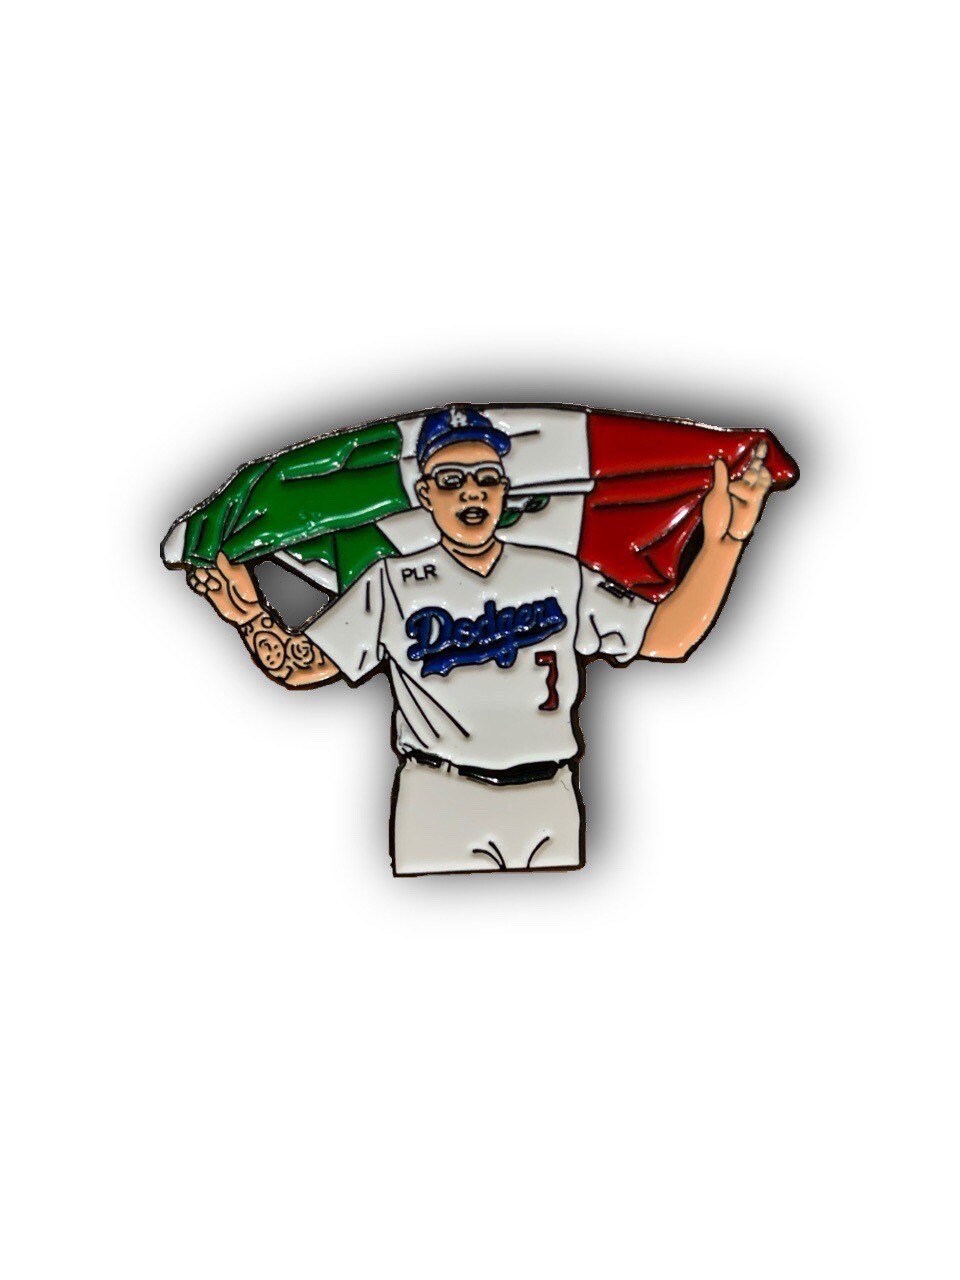 Los Angeles Dodgers Julio Urias Jersey Pin MLB